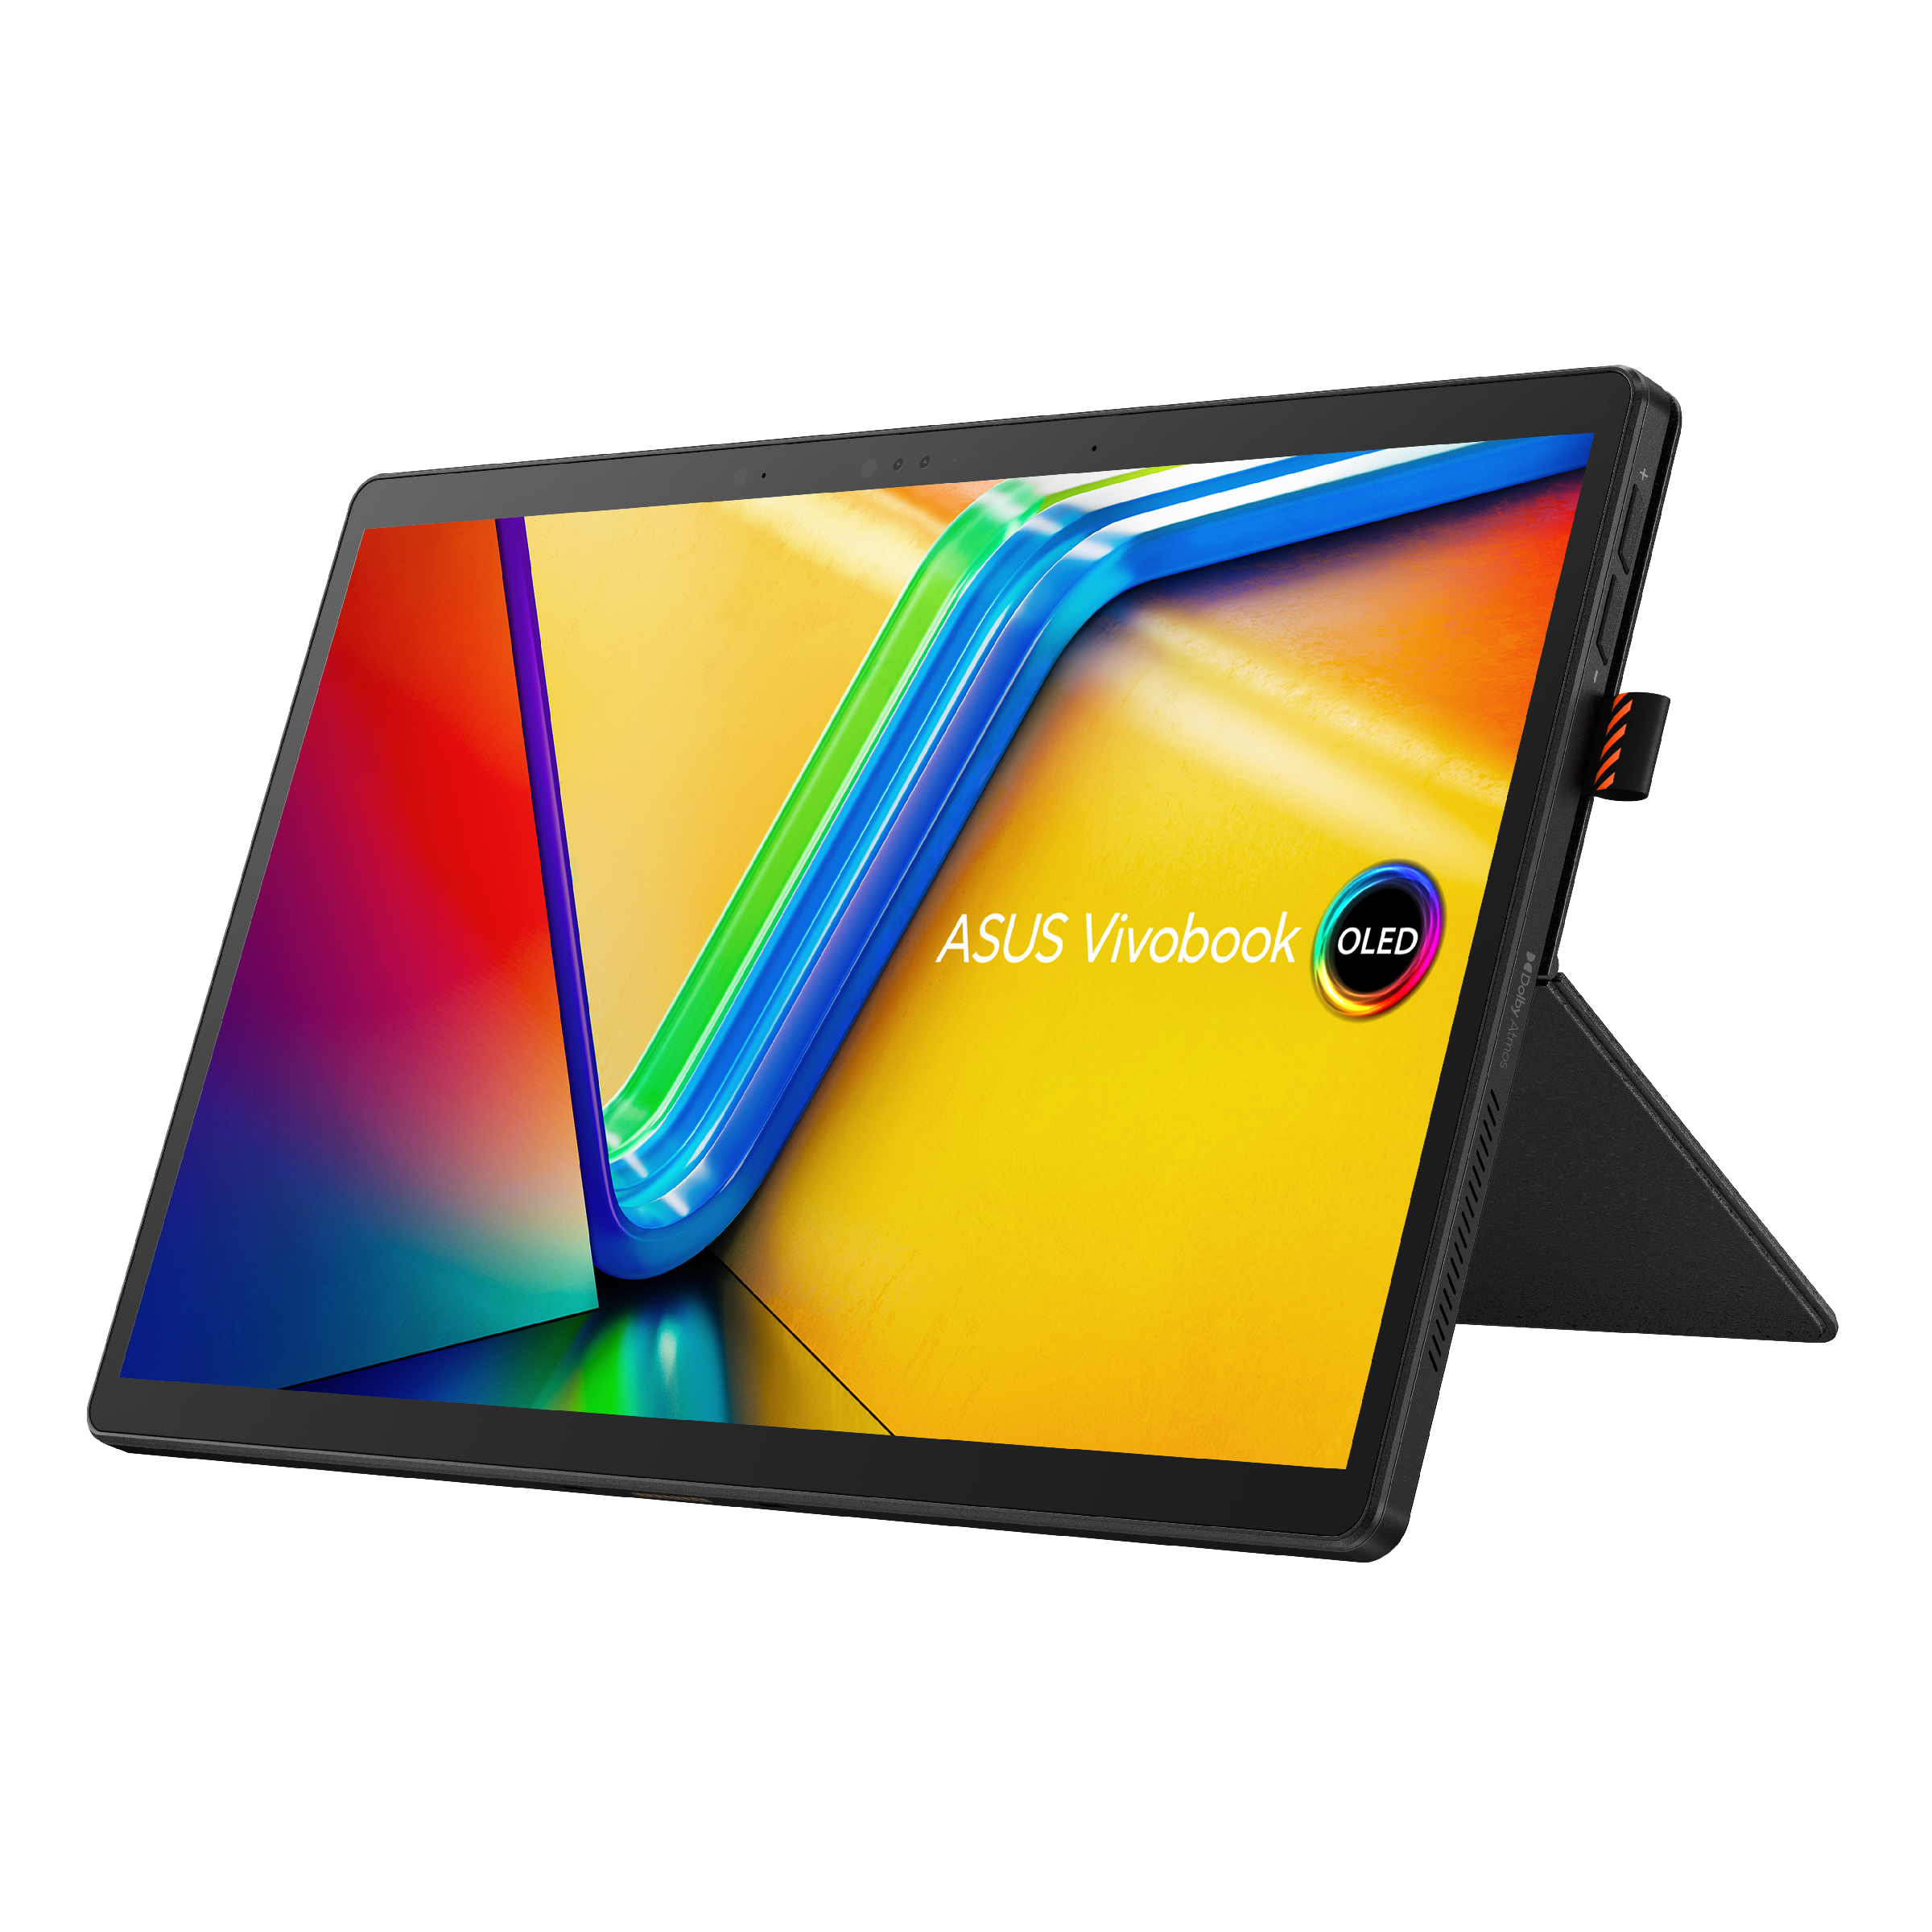 ASUS Vivobook 13 Slate OLED (T3304)｜Laptops For Home｜ASUS Global